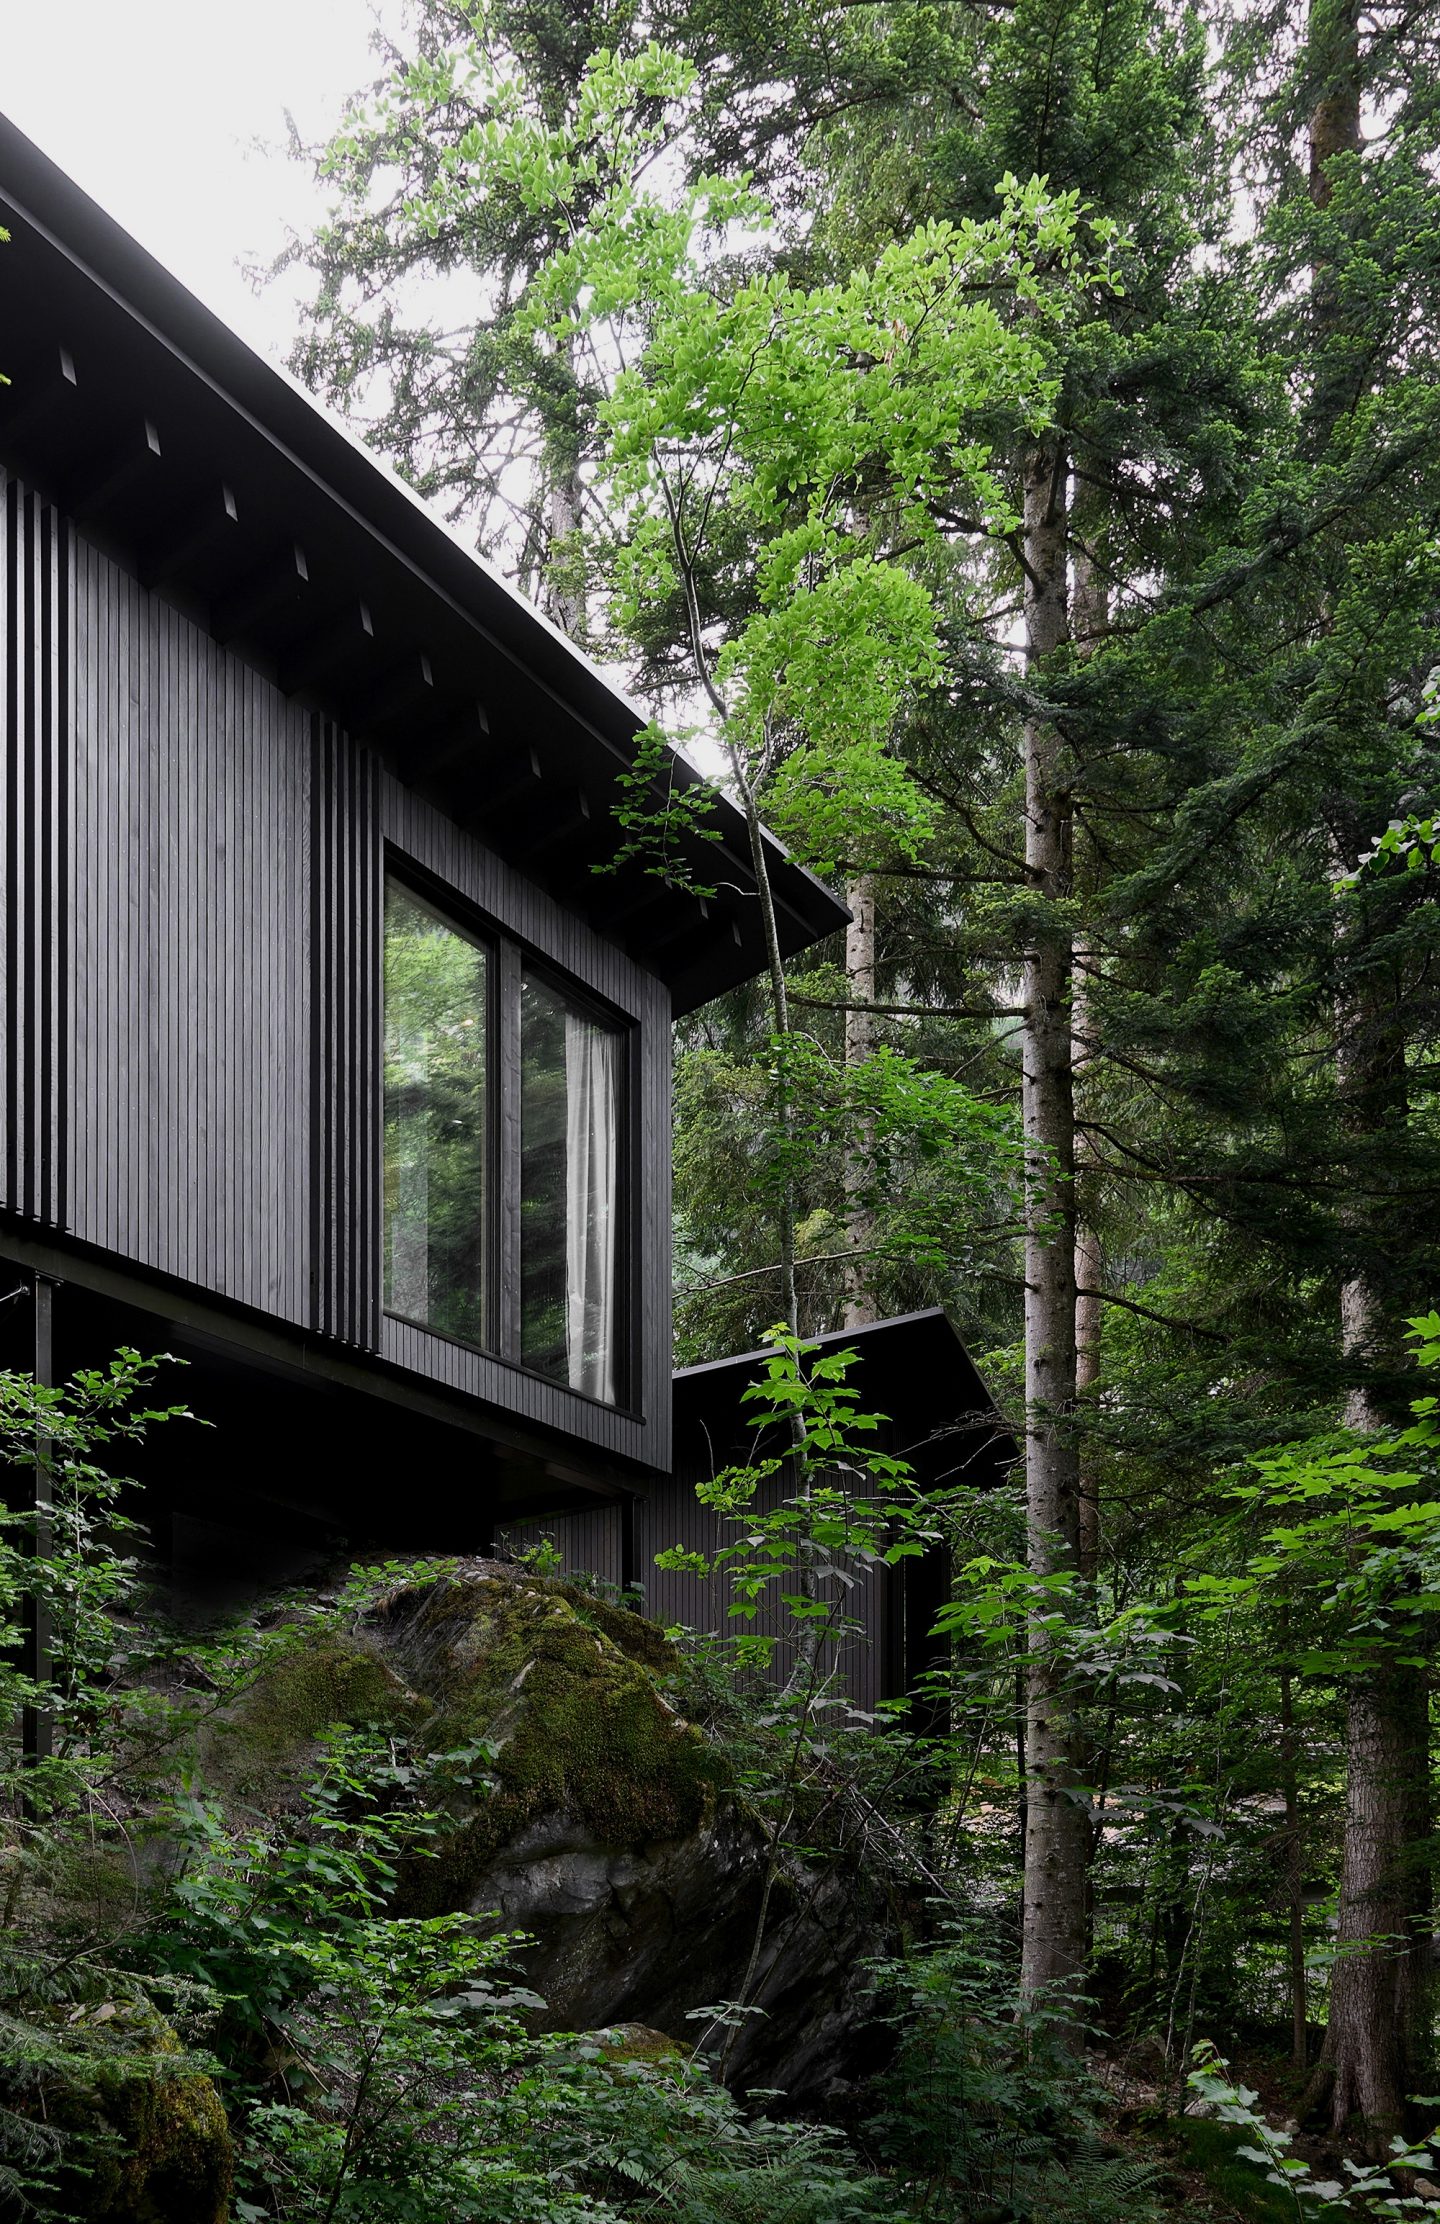 Forest Houses, Blausee, BE. Hildebrand Studios AG, Architecture and Urban Design in Zurich, Switzerland